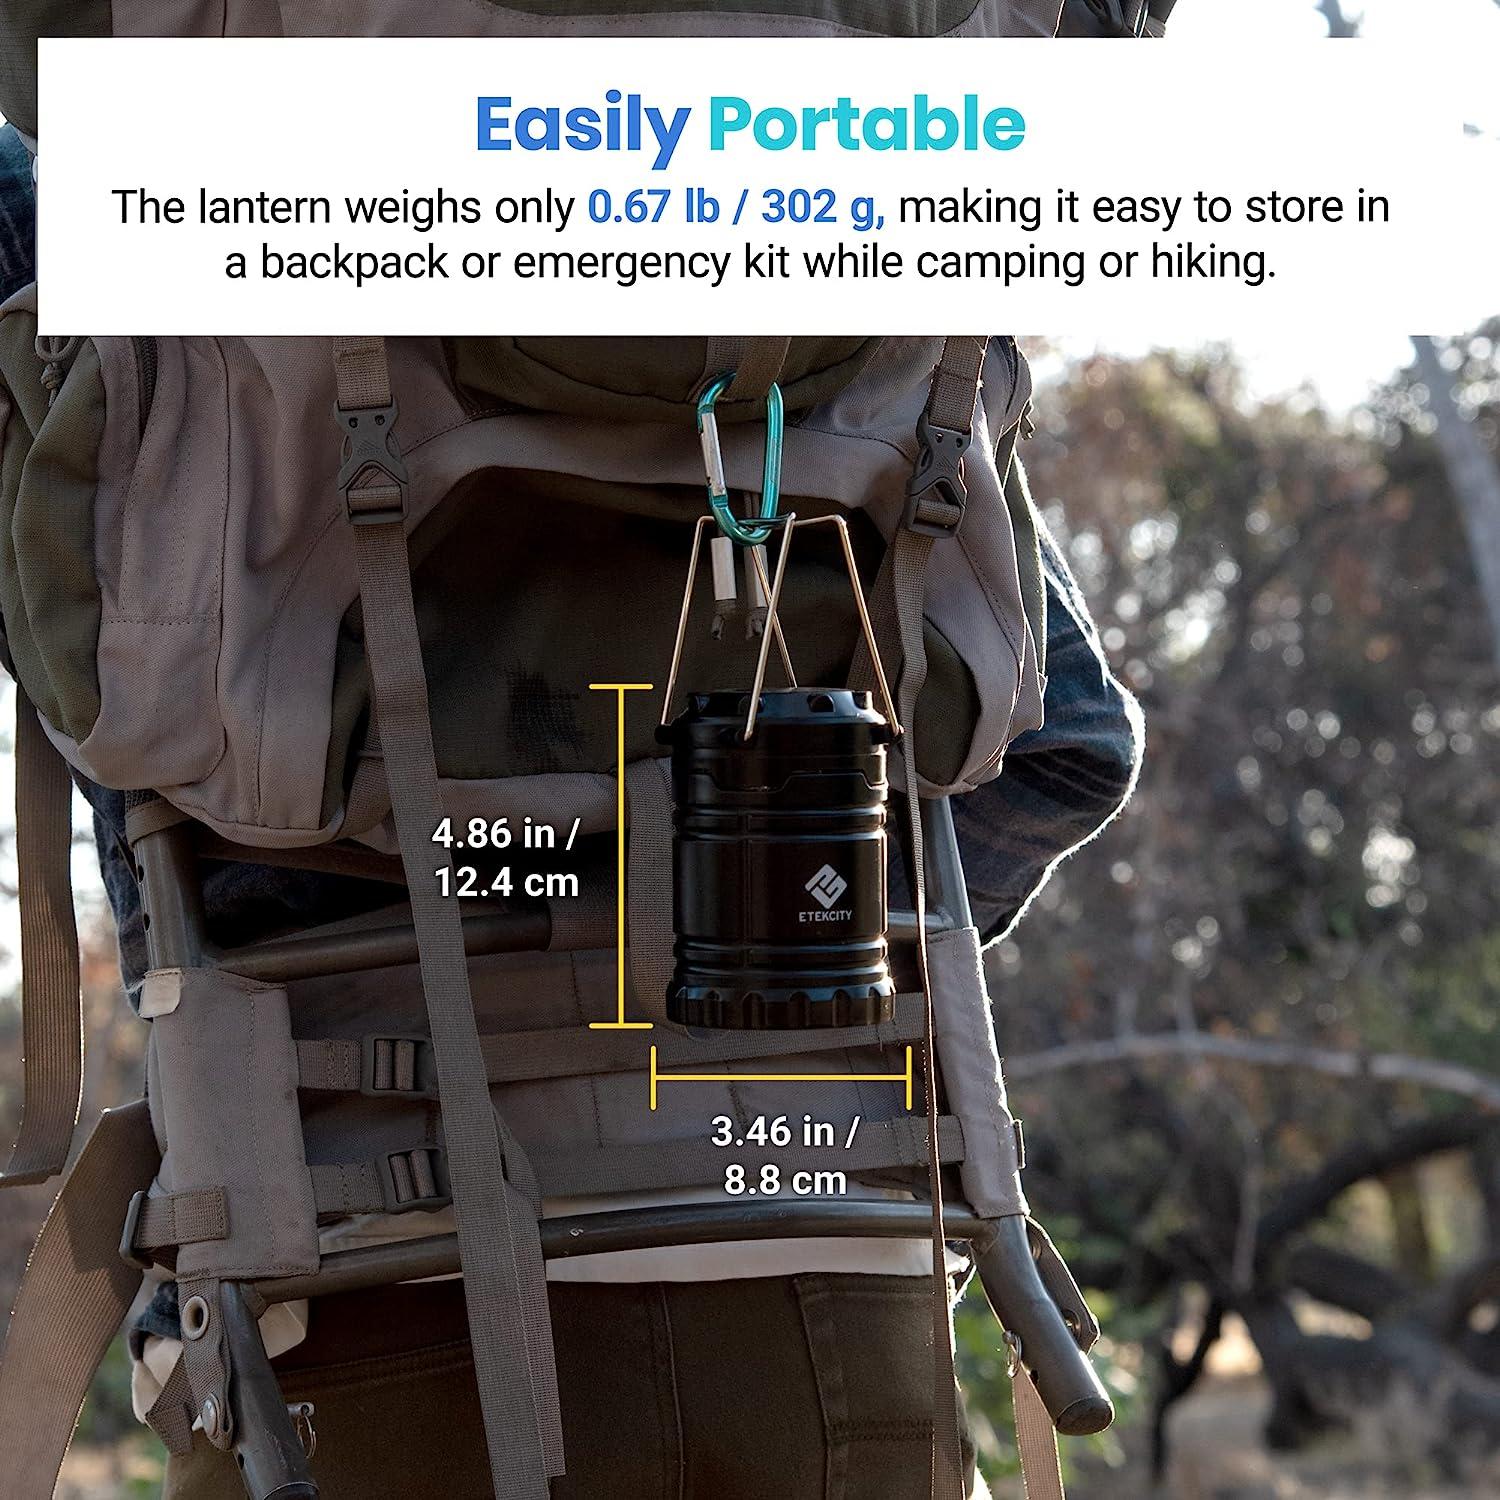 Etekcity Ultra Bright Portable LED Camping Lantern with 3 AA